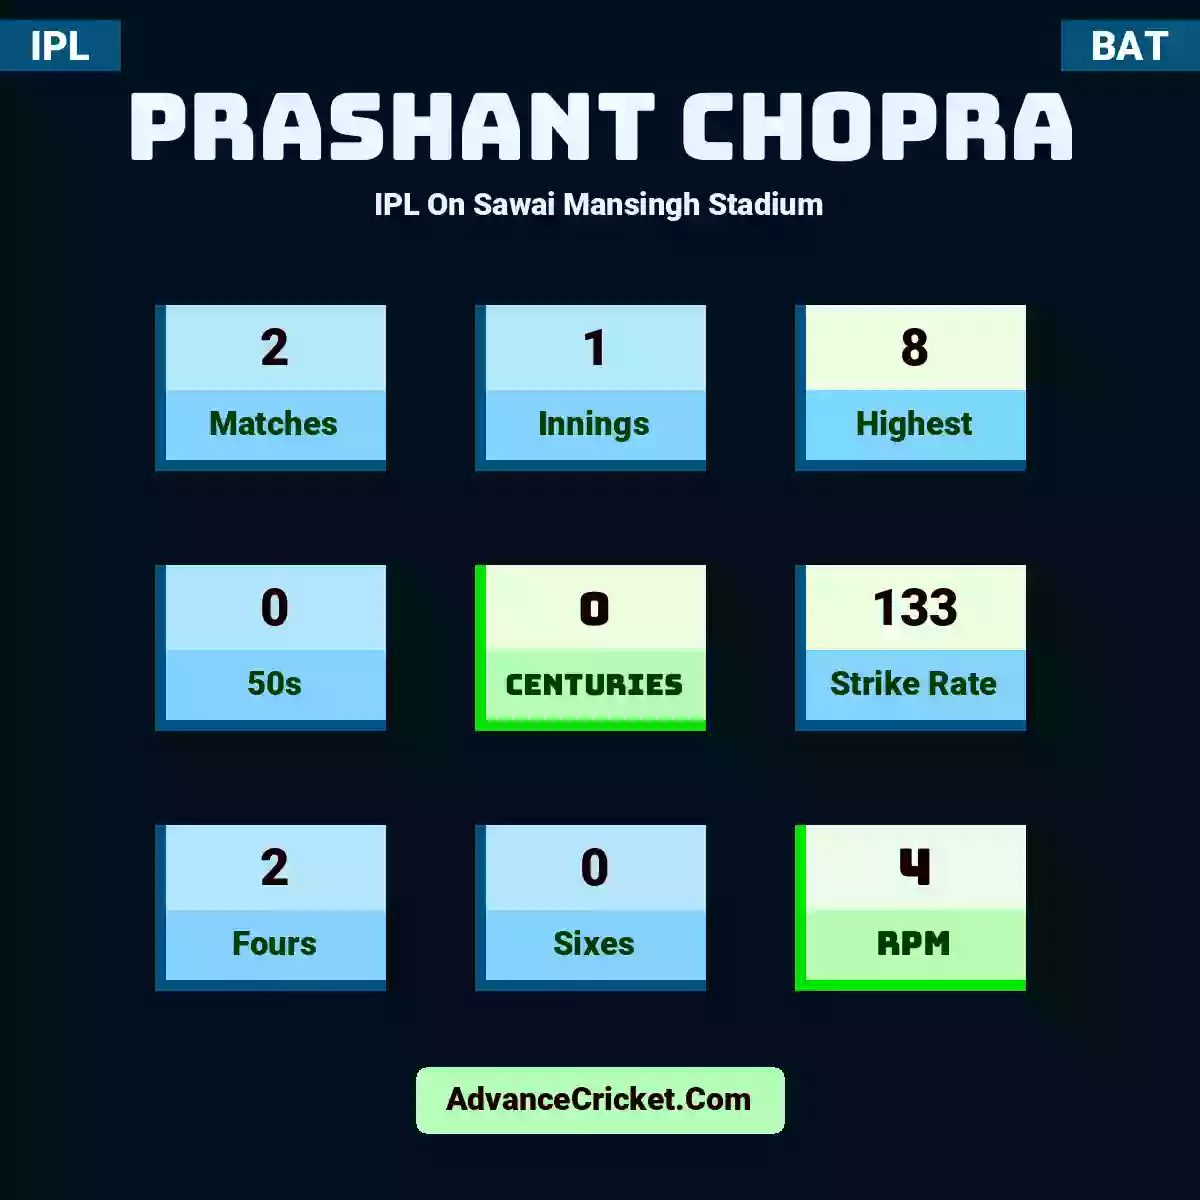 Prashant Chopra IPL  On Sawai Mansingh Stadium, Prashant Chopra played 2 matches, scored 8 runs as highest, 0 half-centuries, and 0 centuries, with a strike rate of 133. P.Chopra hit 2 fours and 0 sixes, with an RPM of 4.